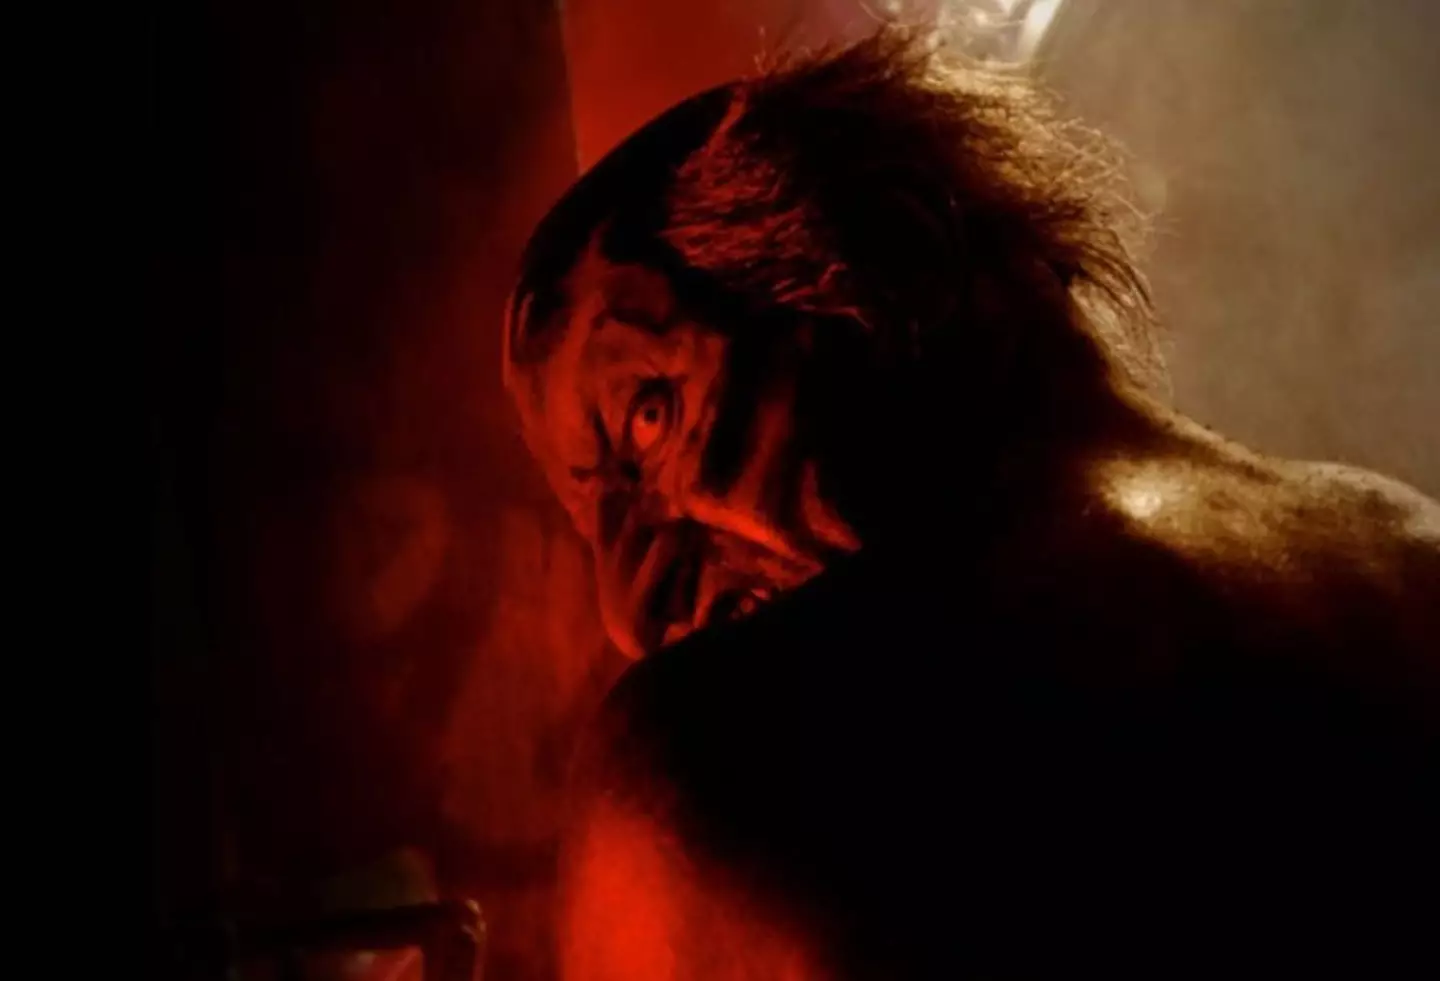 Joseph Bishara played the red faced demon.